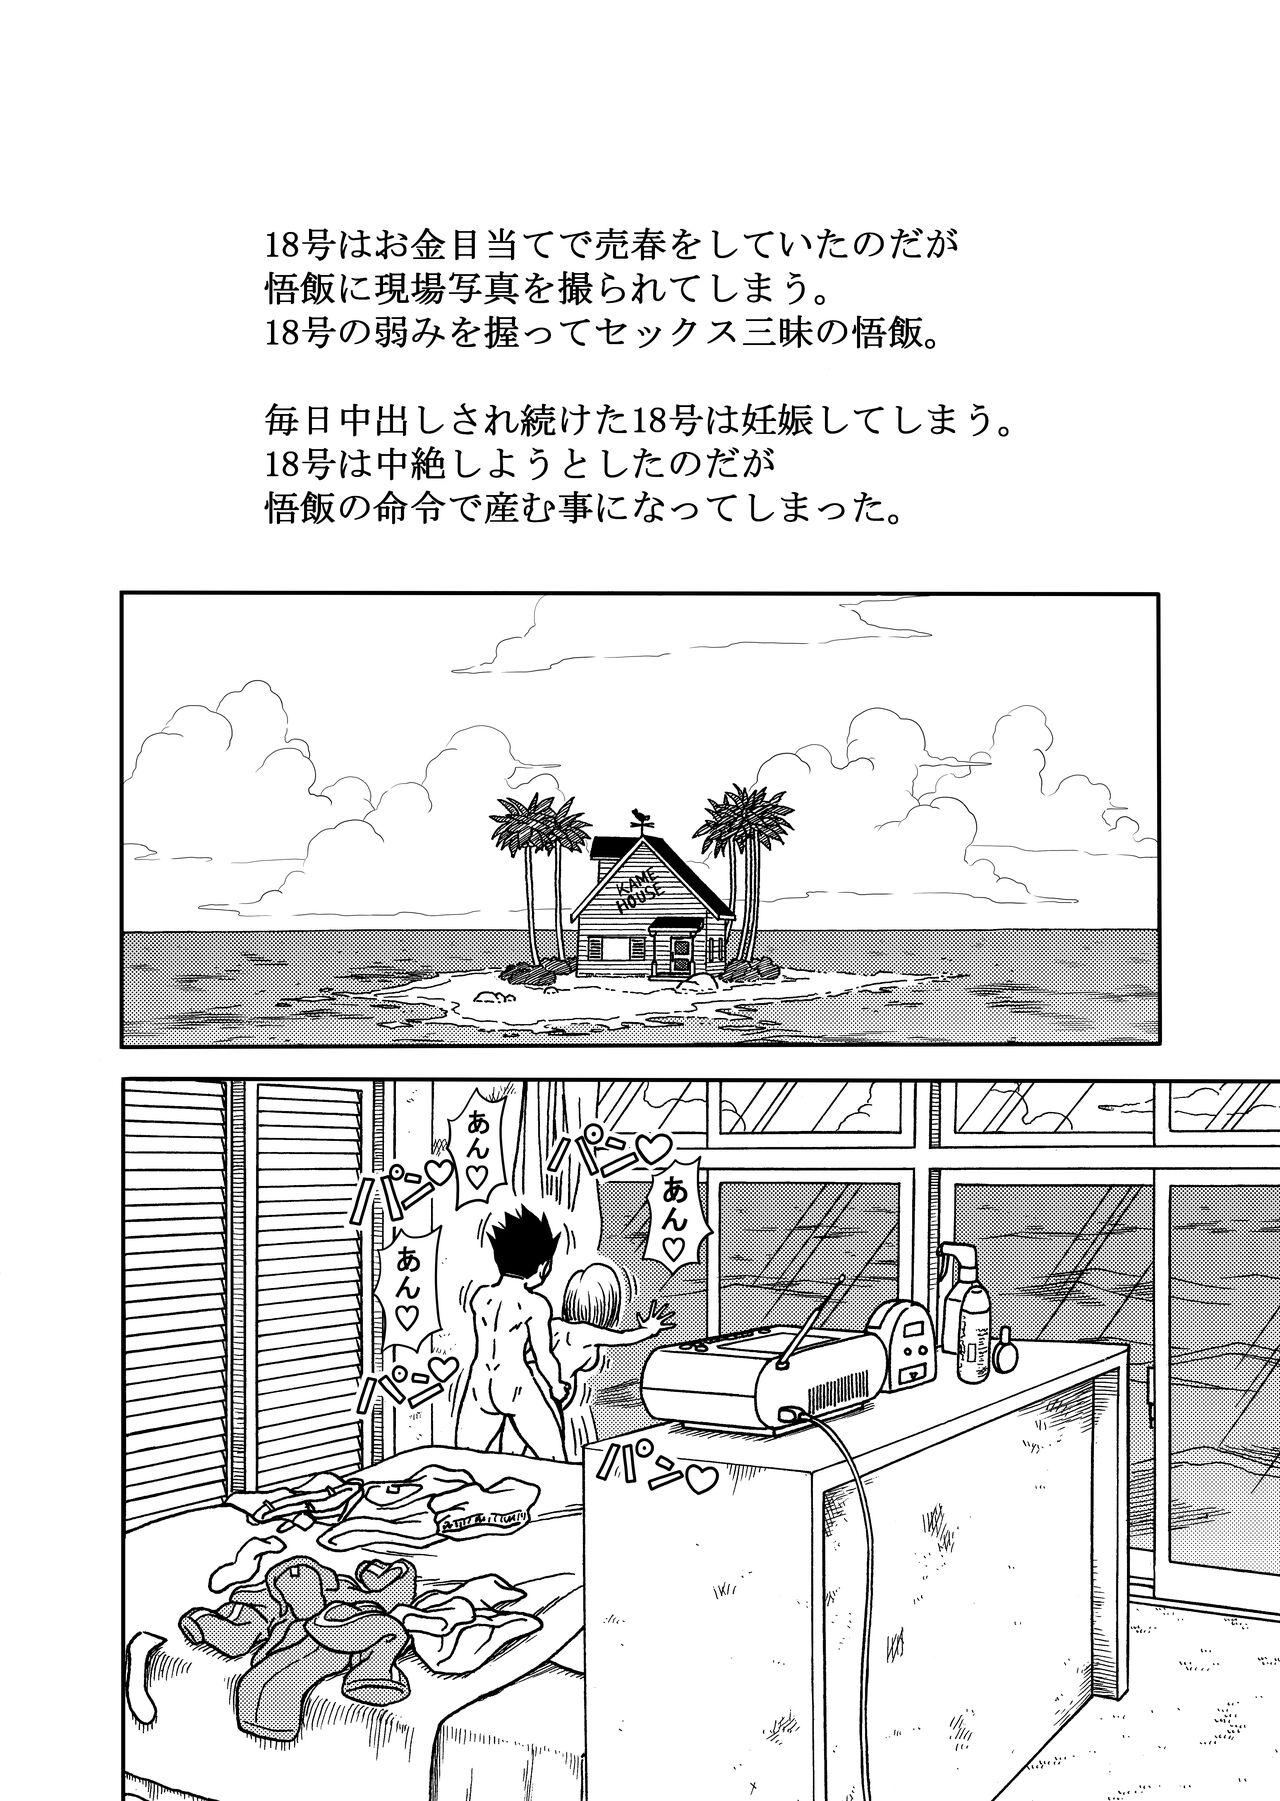 Curious 18-gou NTR Nakadashi on Parade 4 - Dragon ball z Porra - Page 2